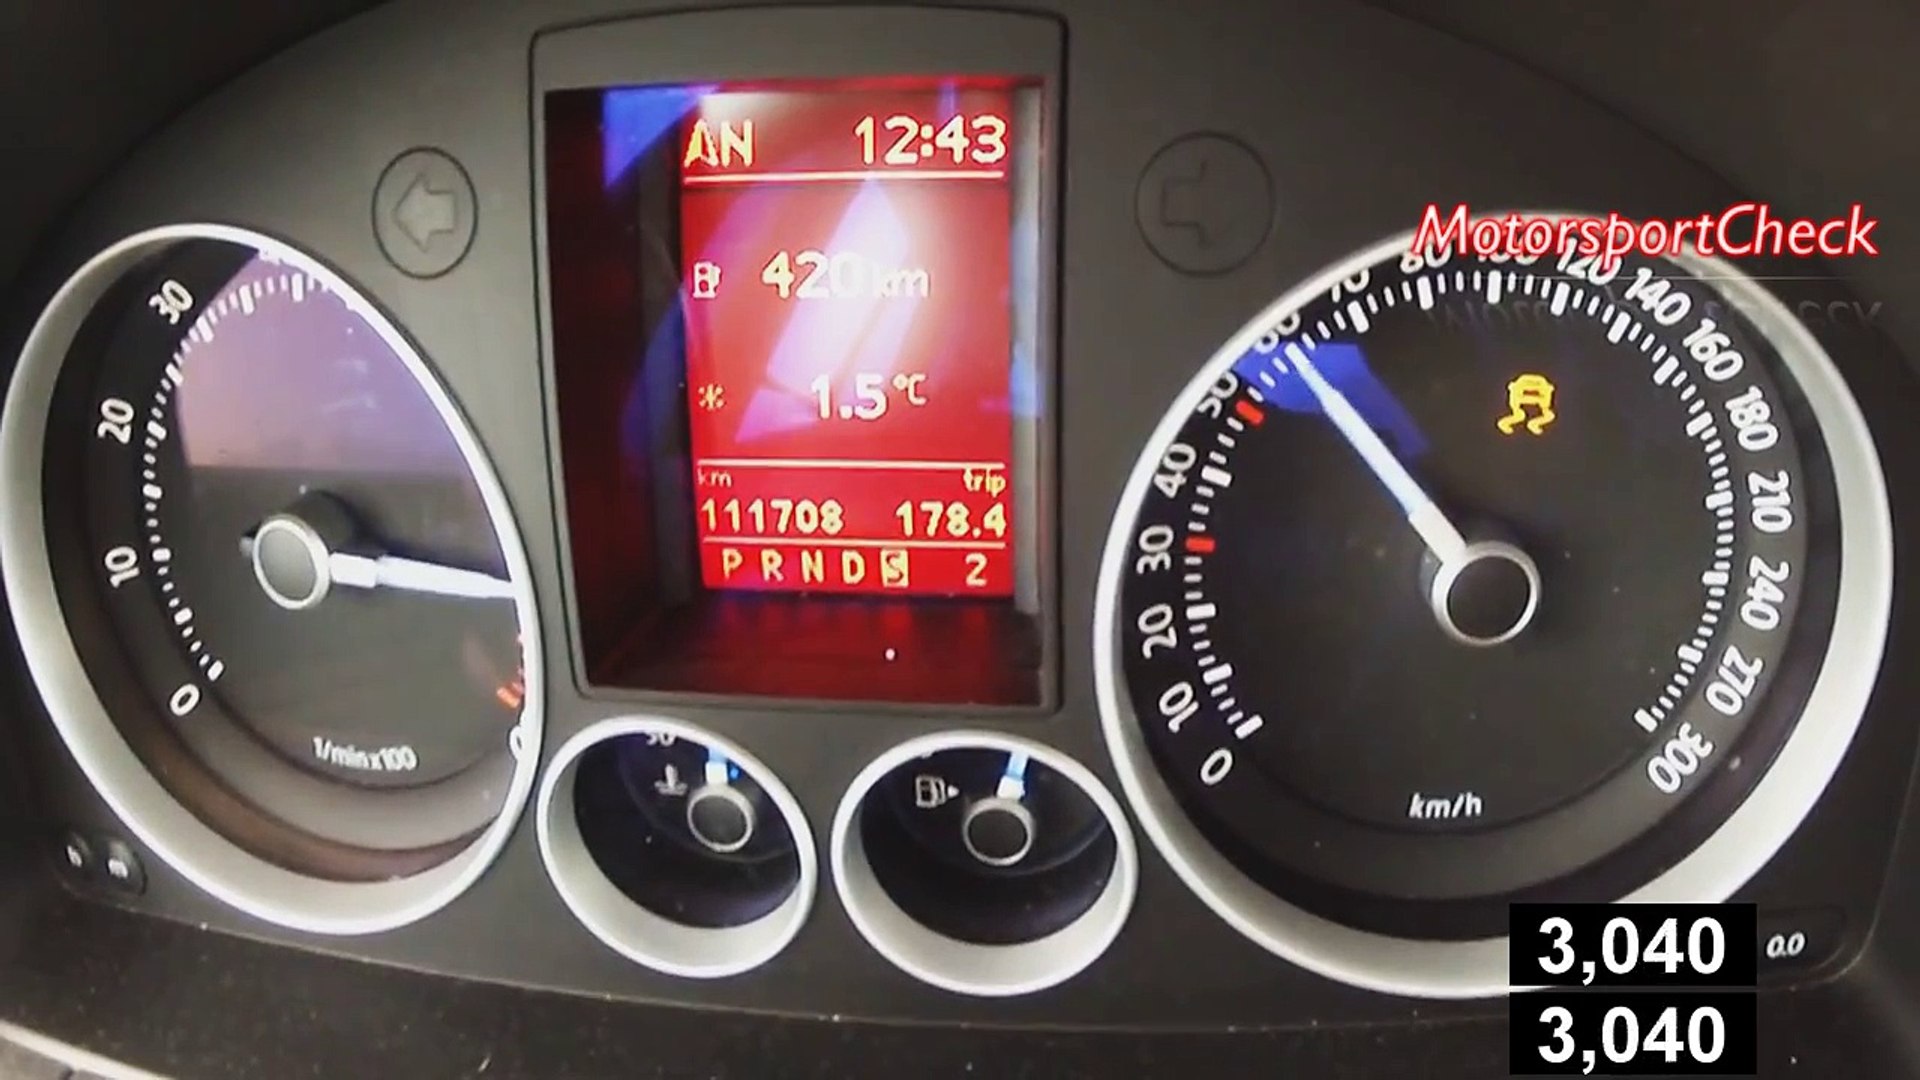 VW Golf 5 V R32 DSG 0-100 0-200 Sound Acceleration test - video Dailymotion